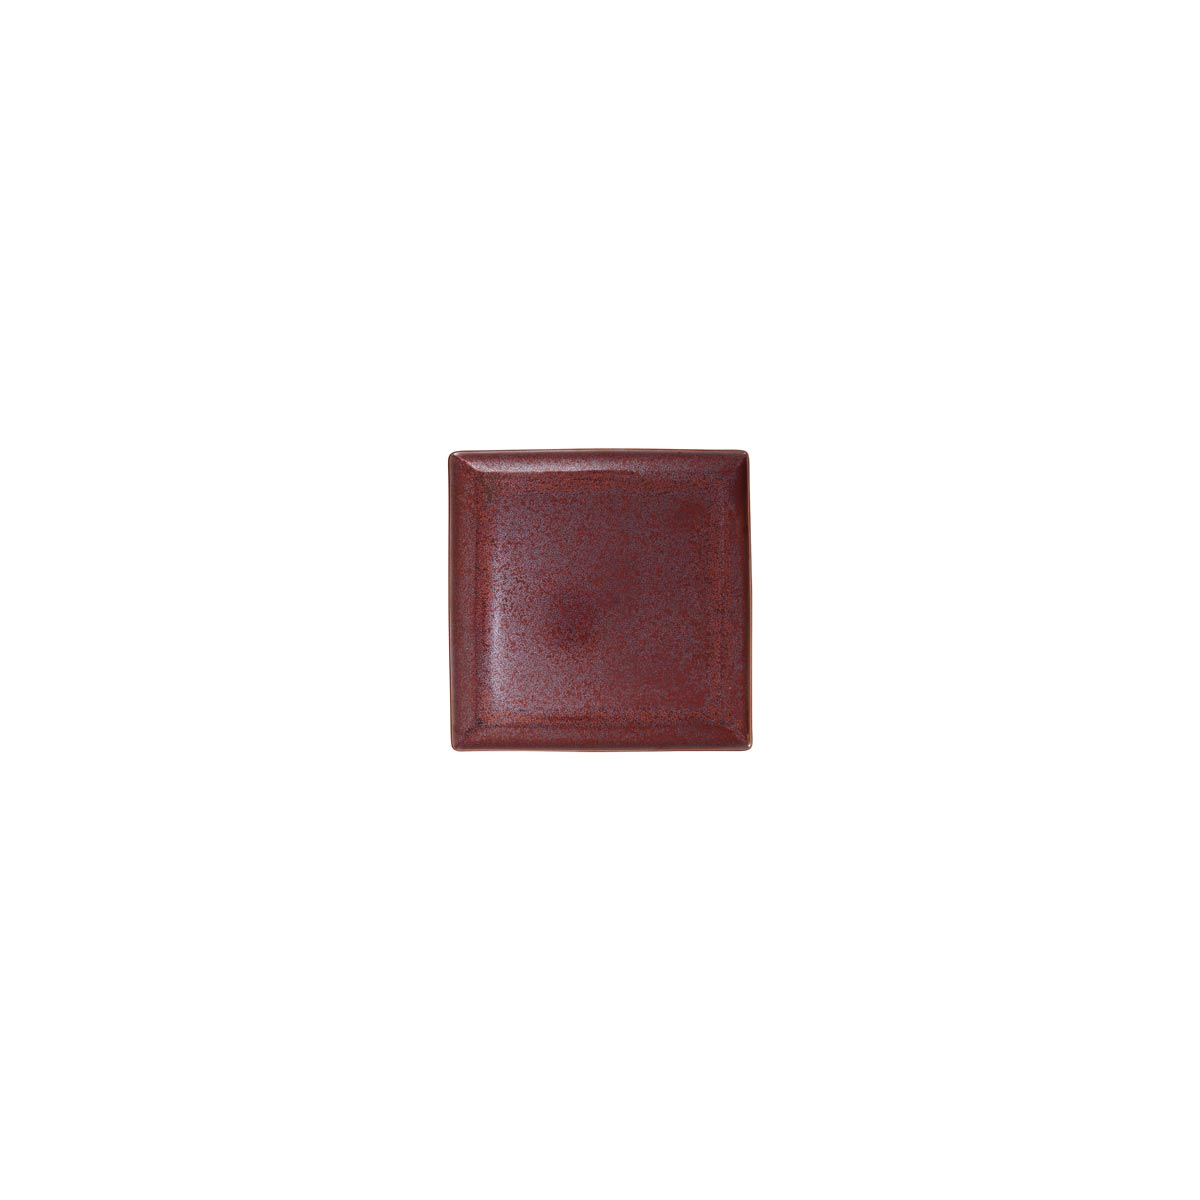 RED GRANITE - Square plate 12 cm